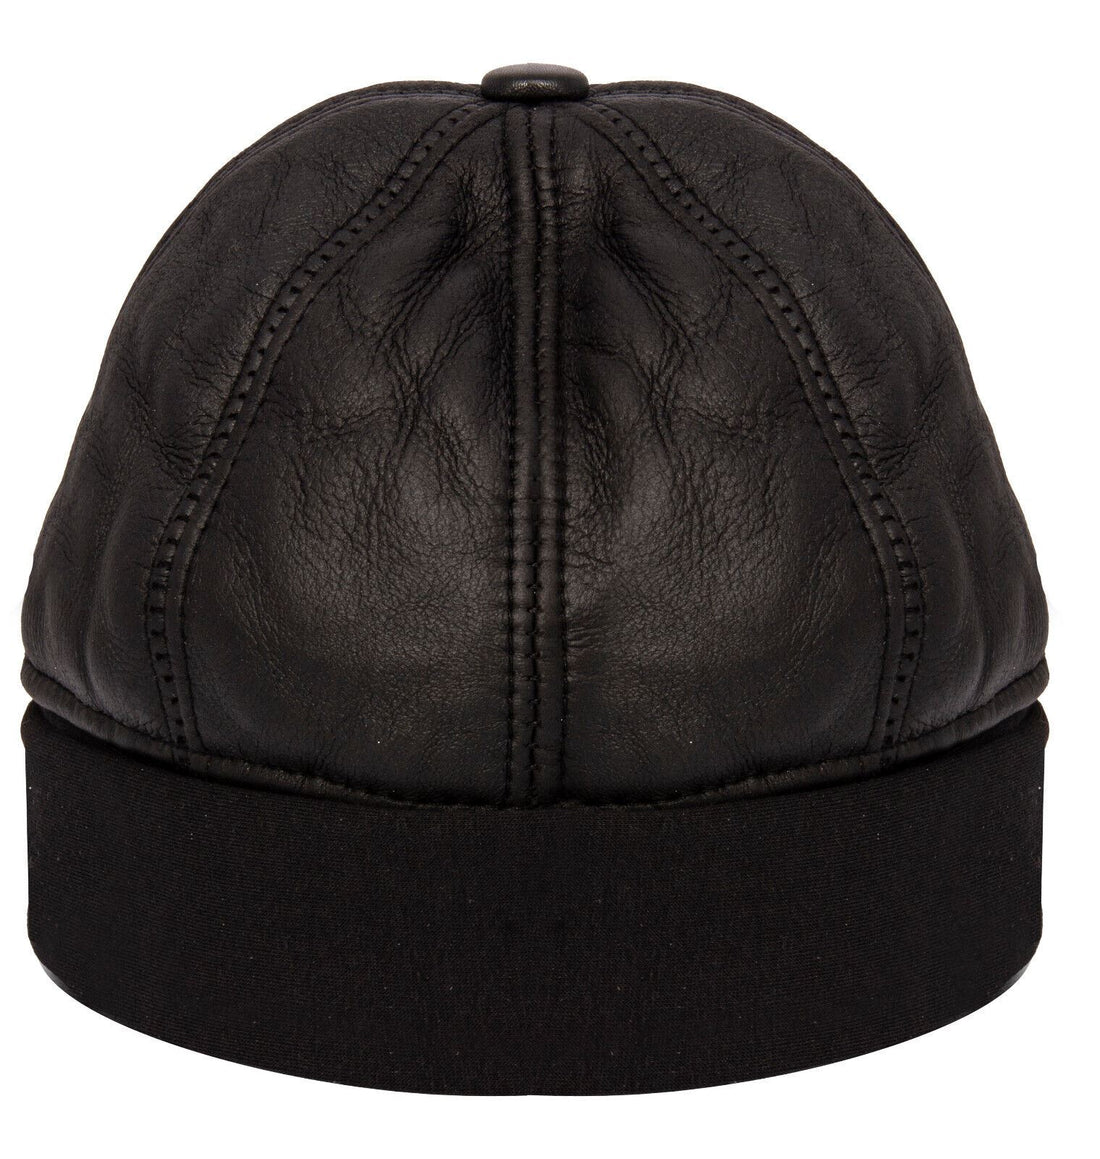 Mens Leather Black Beanie Hat 100% Sheepskin Winter 6 Panel Hat One size - Upperclass Fashions 